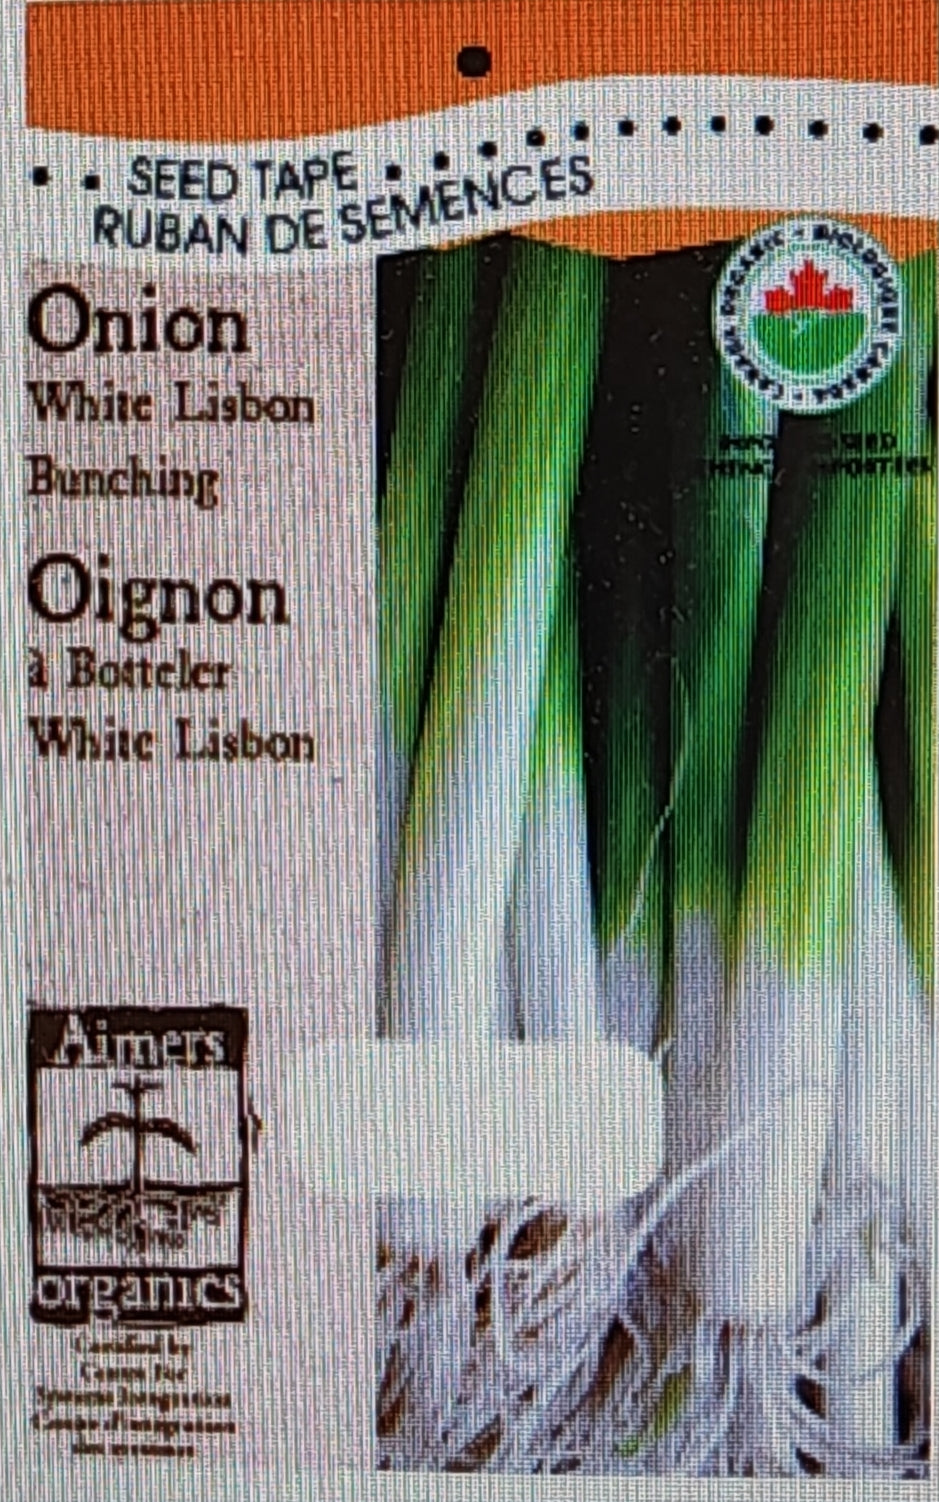 Organic Onion White Lisbon - Aimers Seed Tape